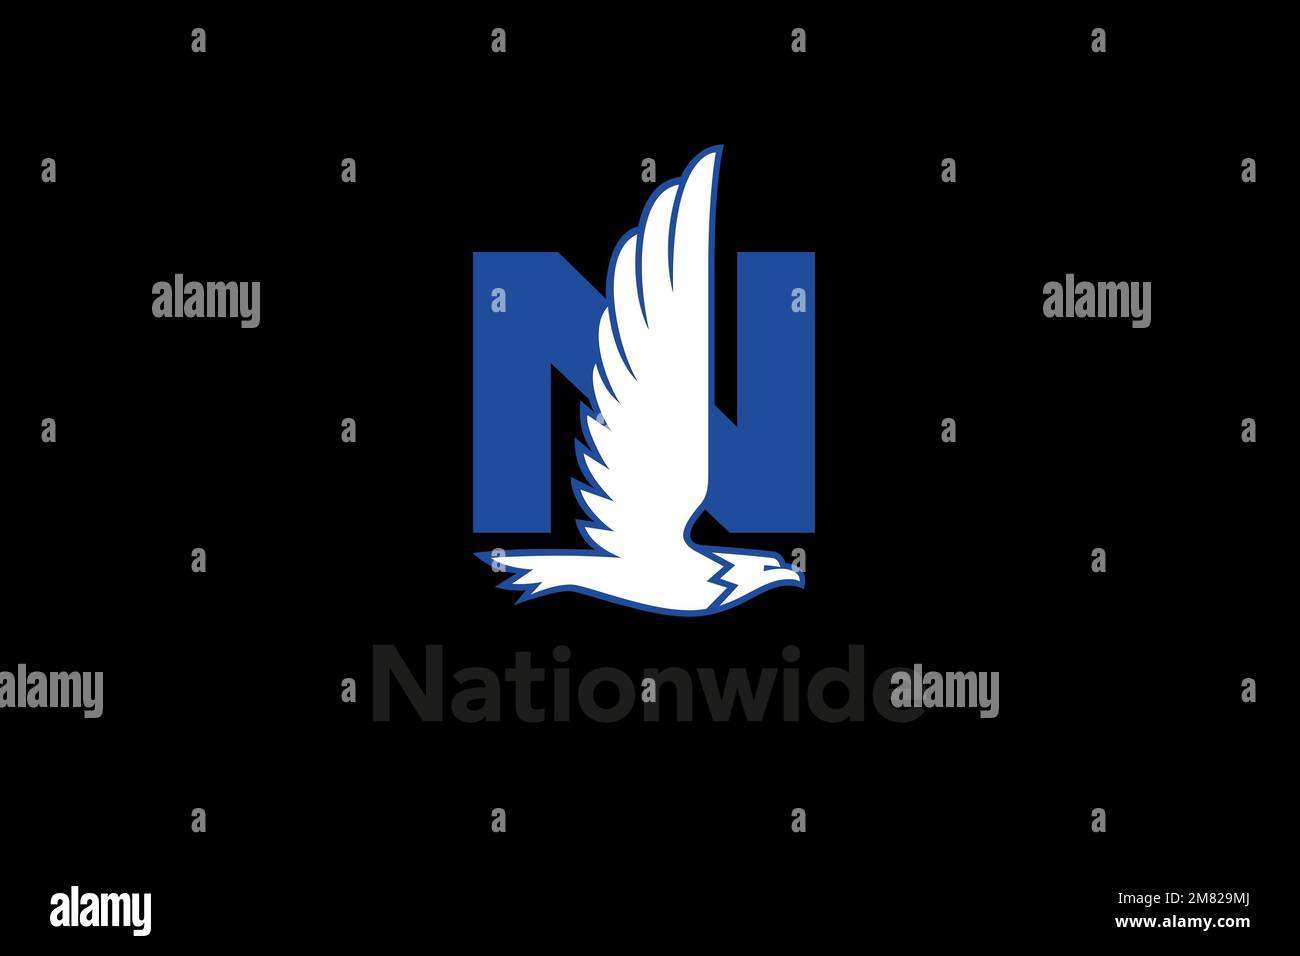 Nationwide Mutual Insurance Company, Logo, Black Background Stock Photo